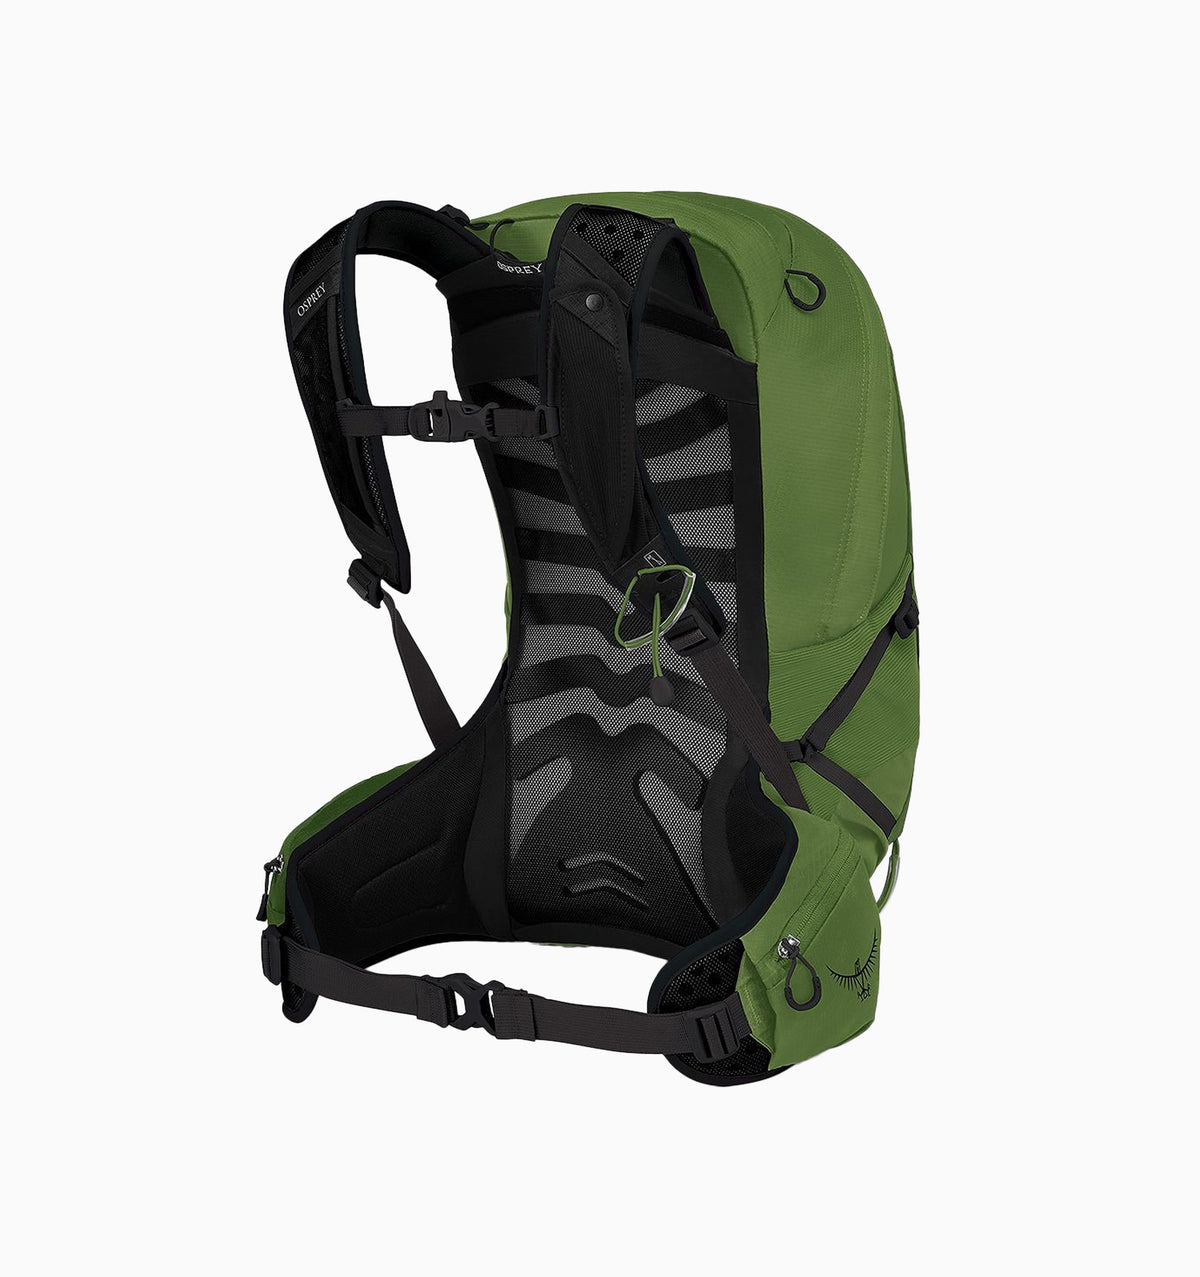 Osprey Talon Men's Day Hiking Backpack 22L - Green Belt